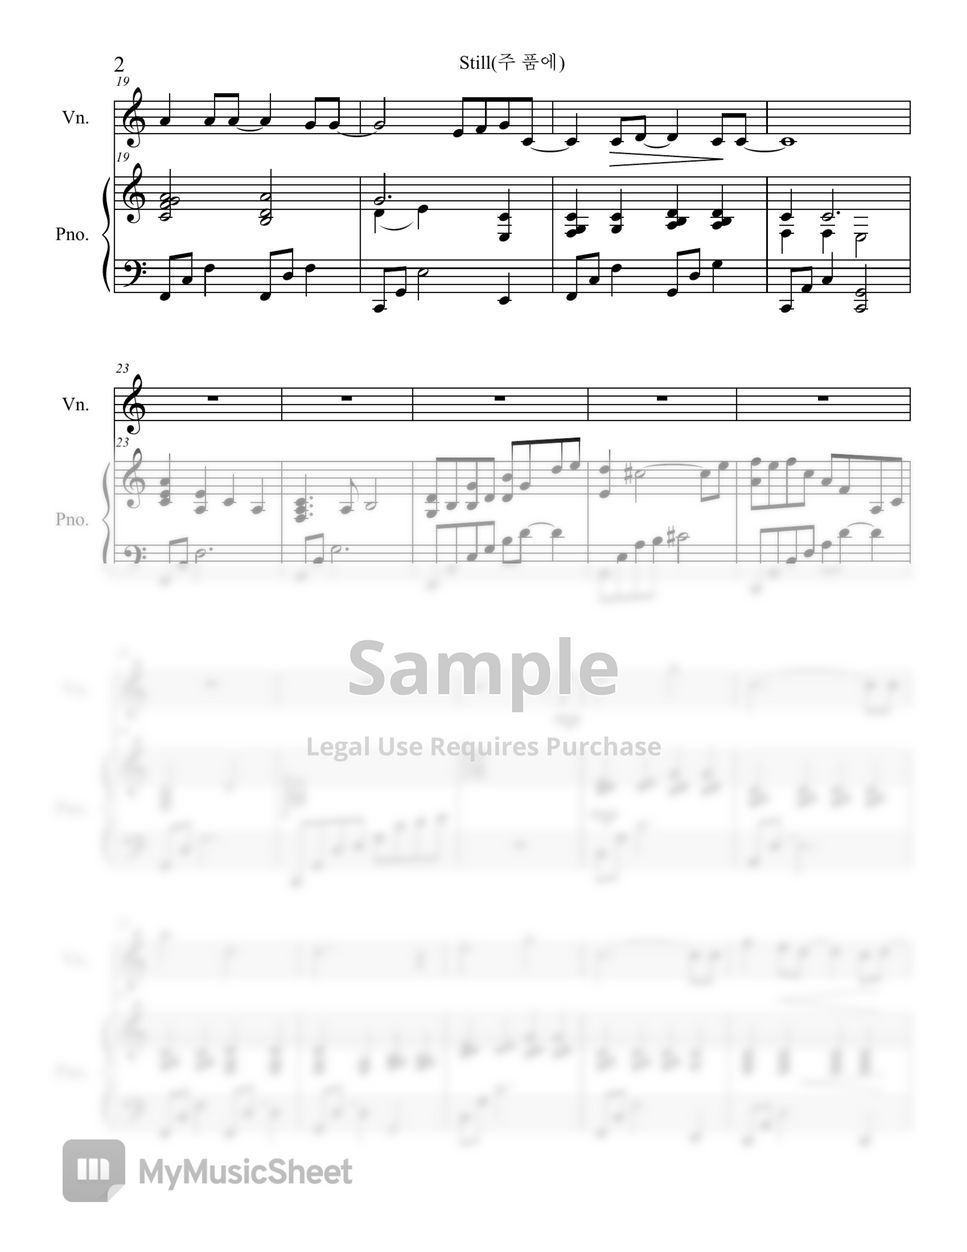 Reuben Morgan - Still(주 품에) (Violin) by Pianist Jin